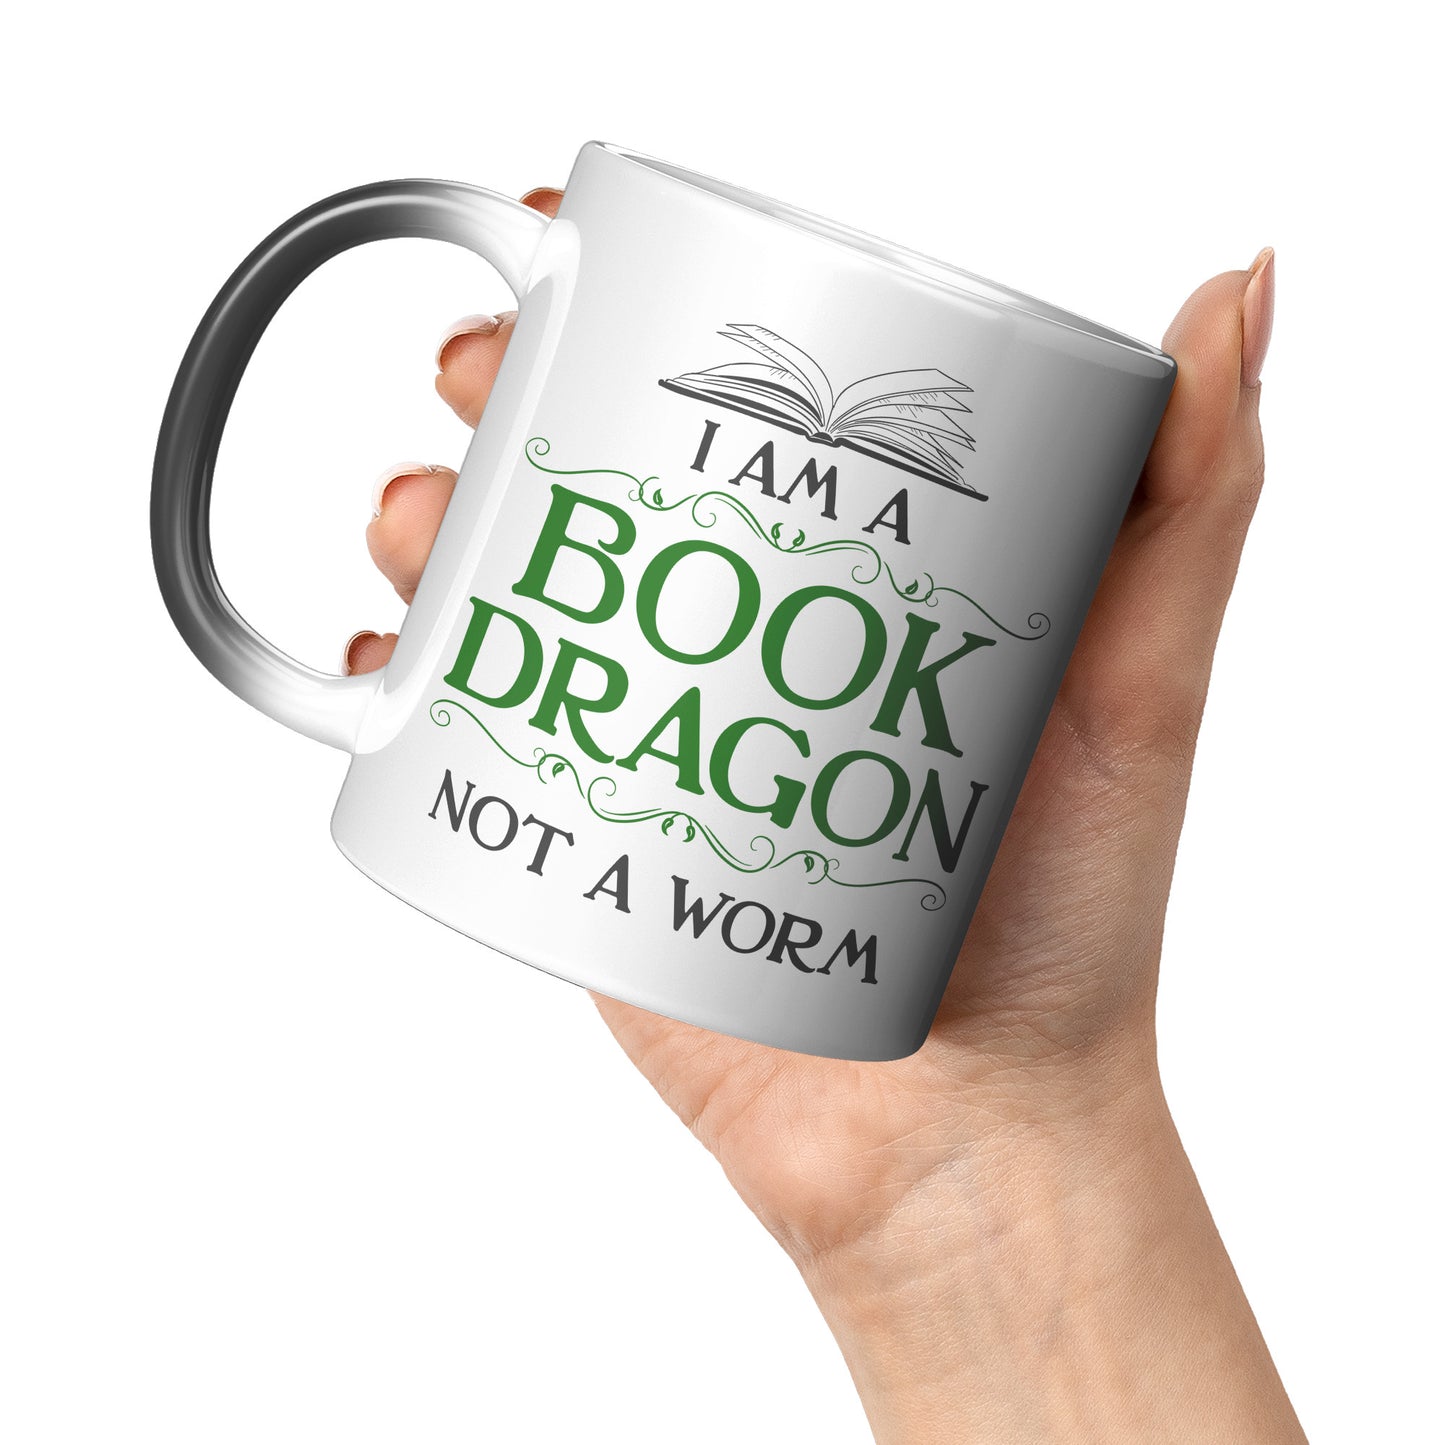 I Am A Book Dragon Not A Worm | Magic Mug